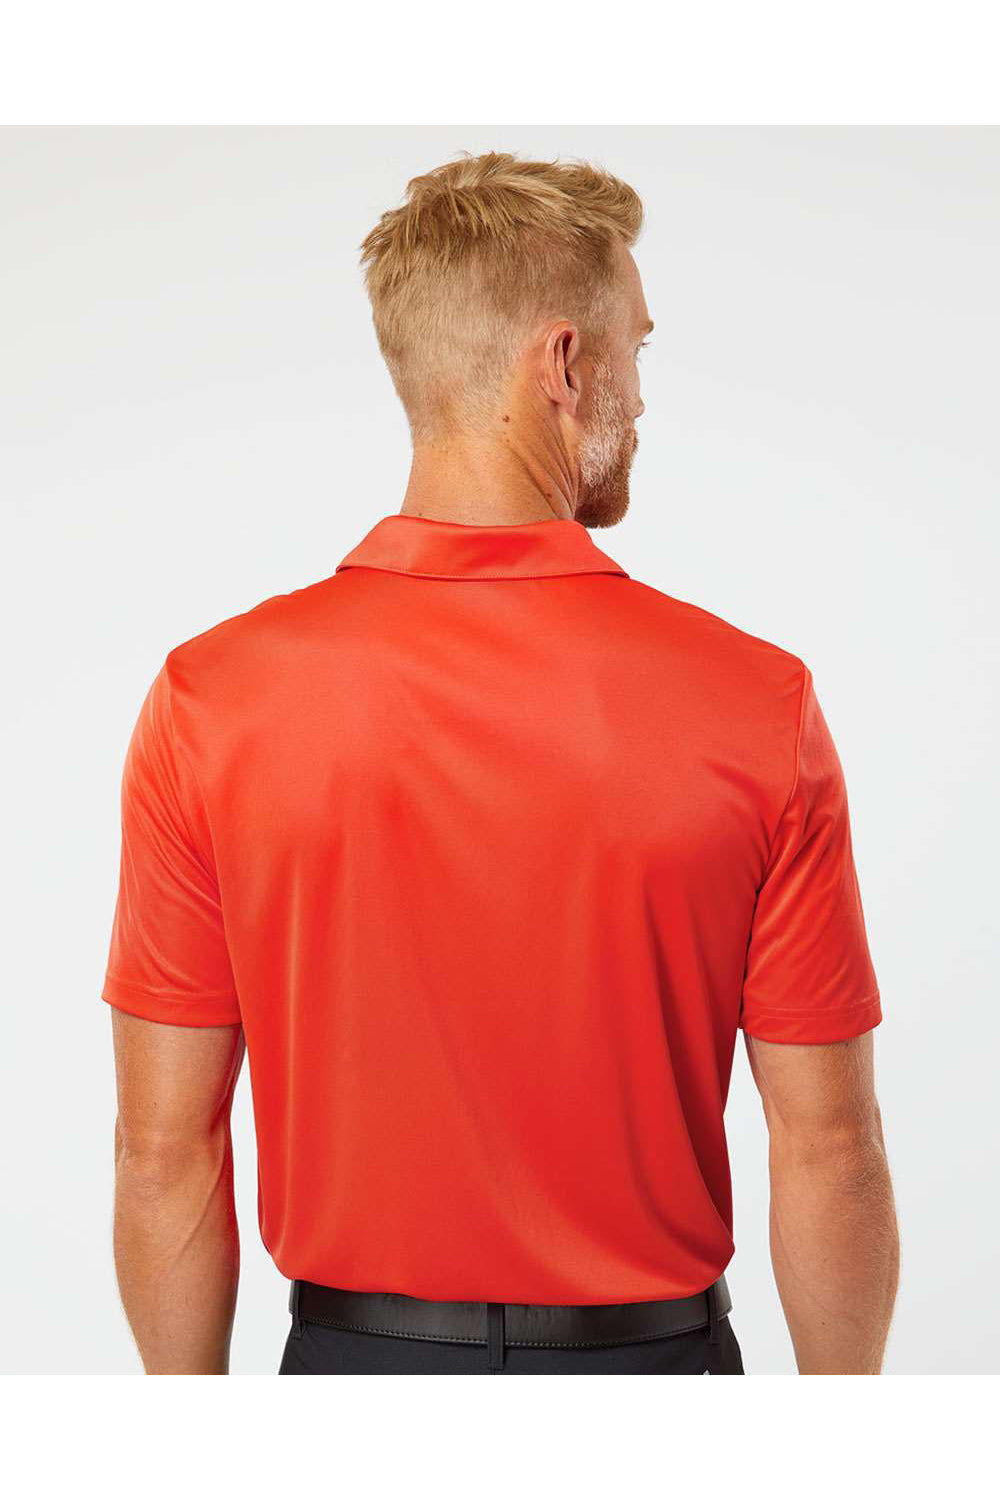 Adidas A324 Mens 3 Stripes Short Sleeve Polo Shirt Blaze Orange/Black Model Back